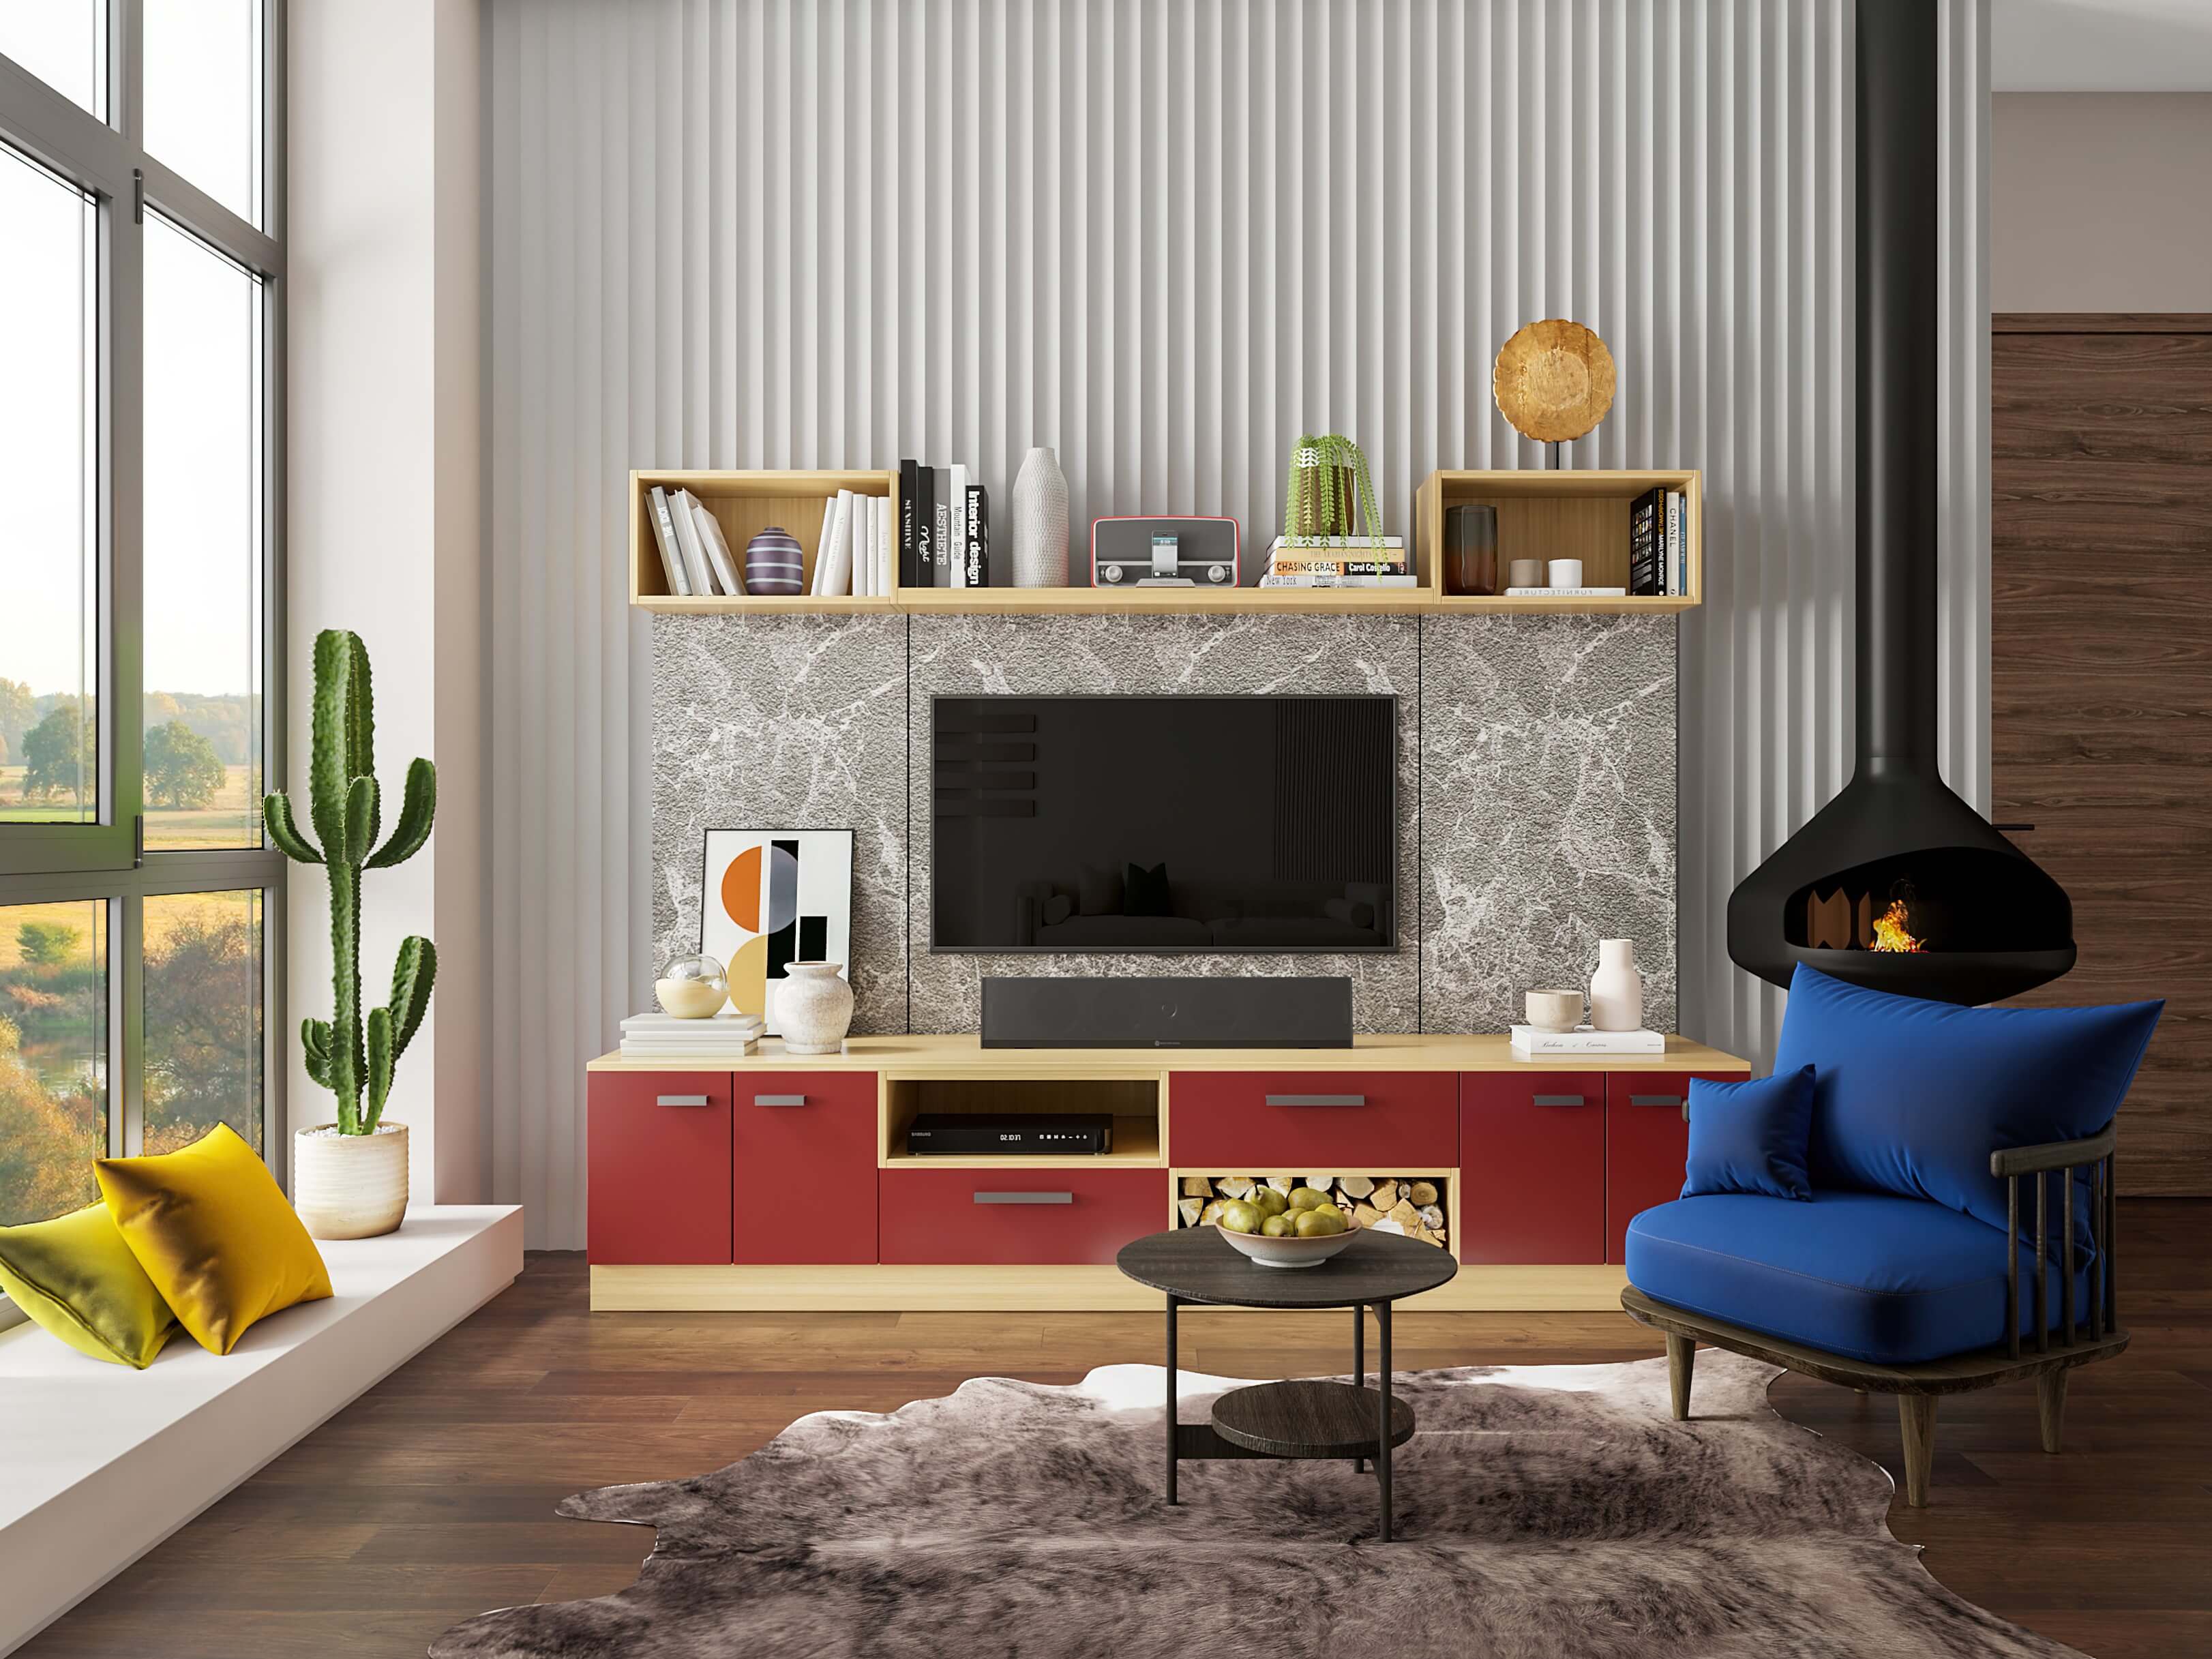 Quirky yet elegant living room design - Beautiful Homes